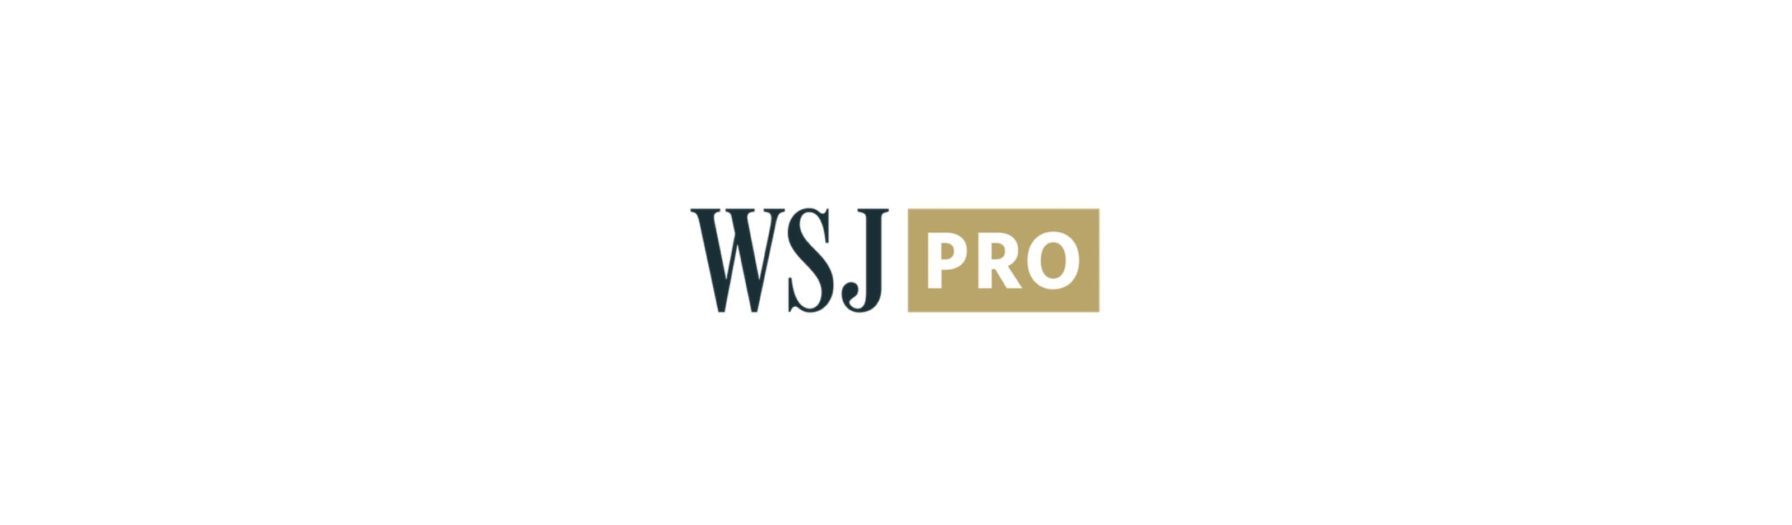  WSJ Pro logo